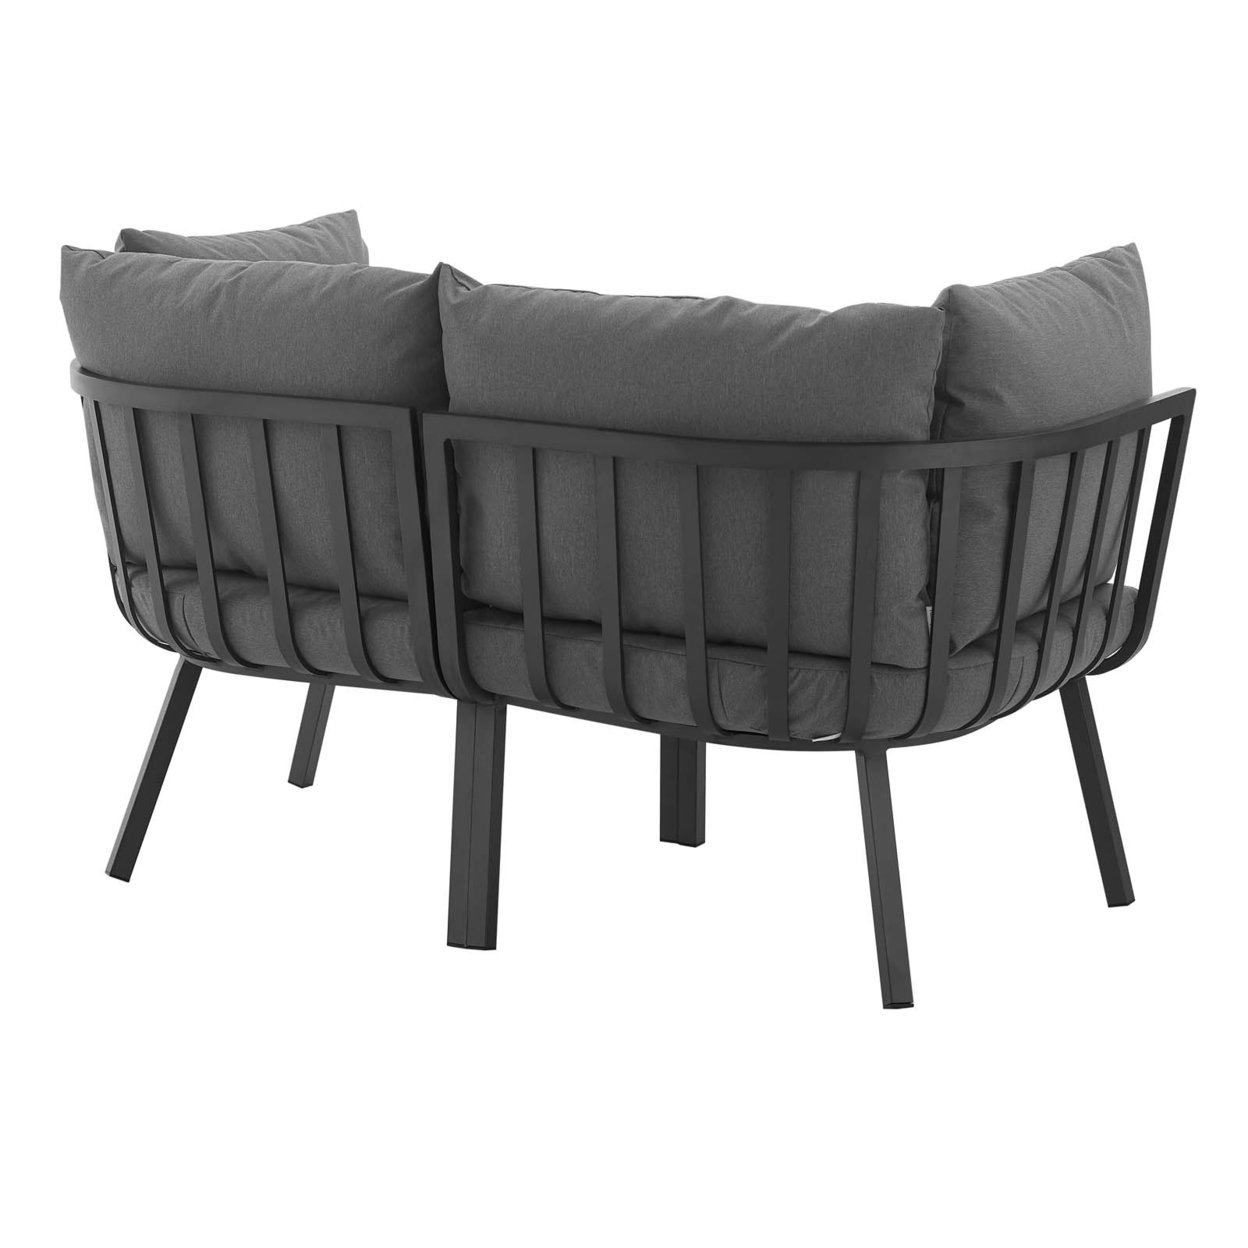 Riverside 2 Piece Outdoor Patio Aluminum Sectional Sofa Set, Gray Charcoal